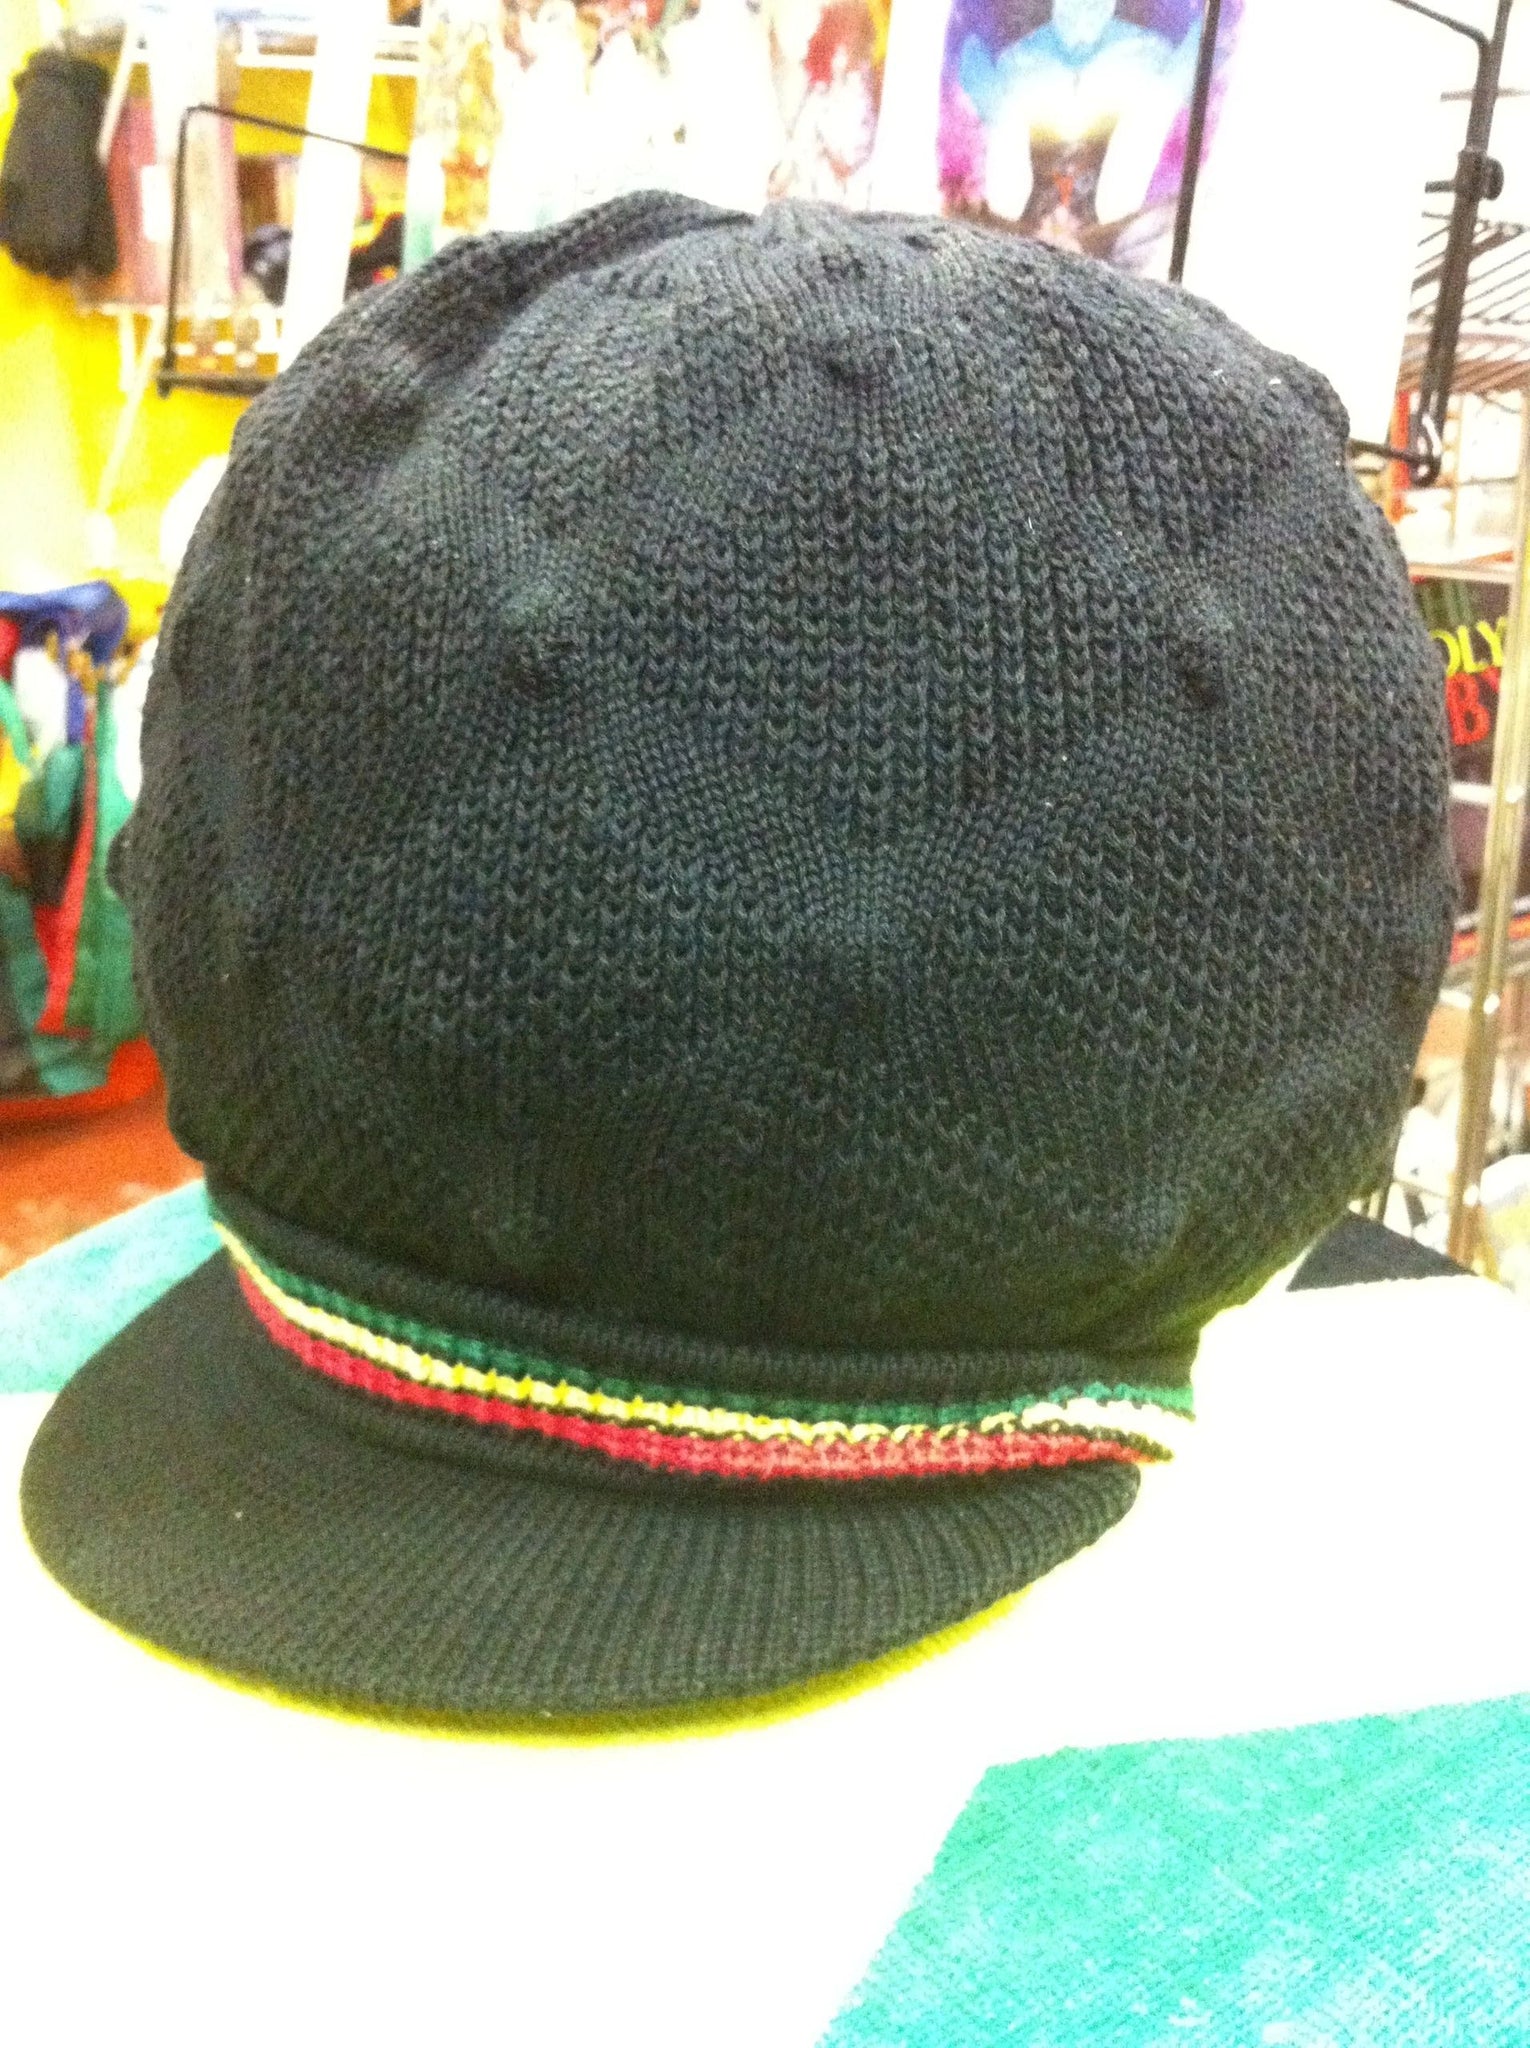 RH026-1 Medium Rastafarian Crown AKA rasta hats tams dread locks cap